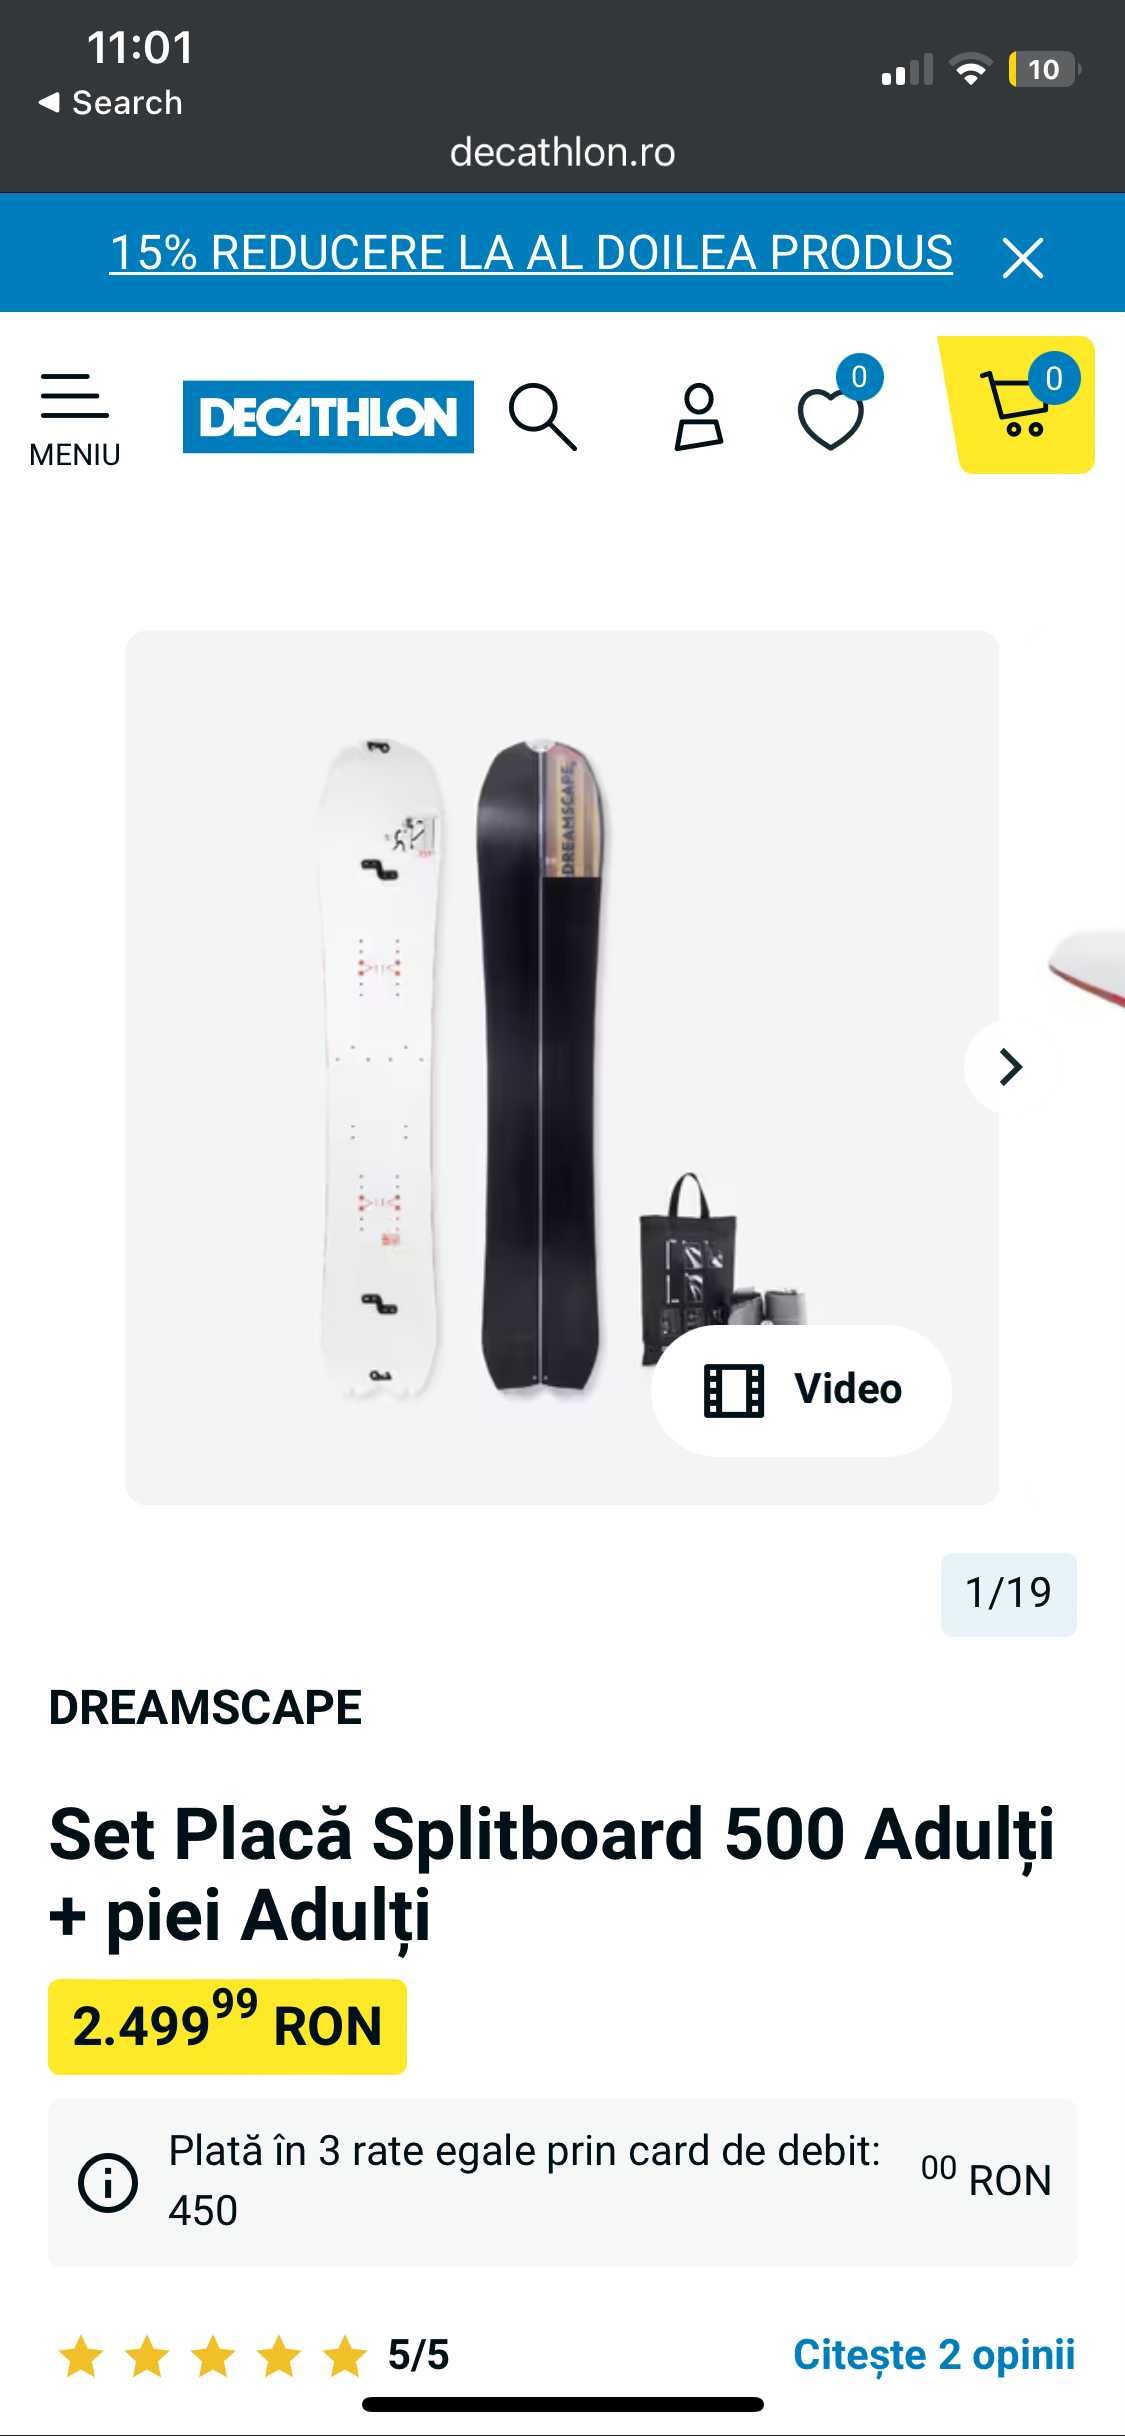 Splitboard Dreamscape 500 151cm plus piei 1800 RON